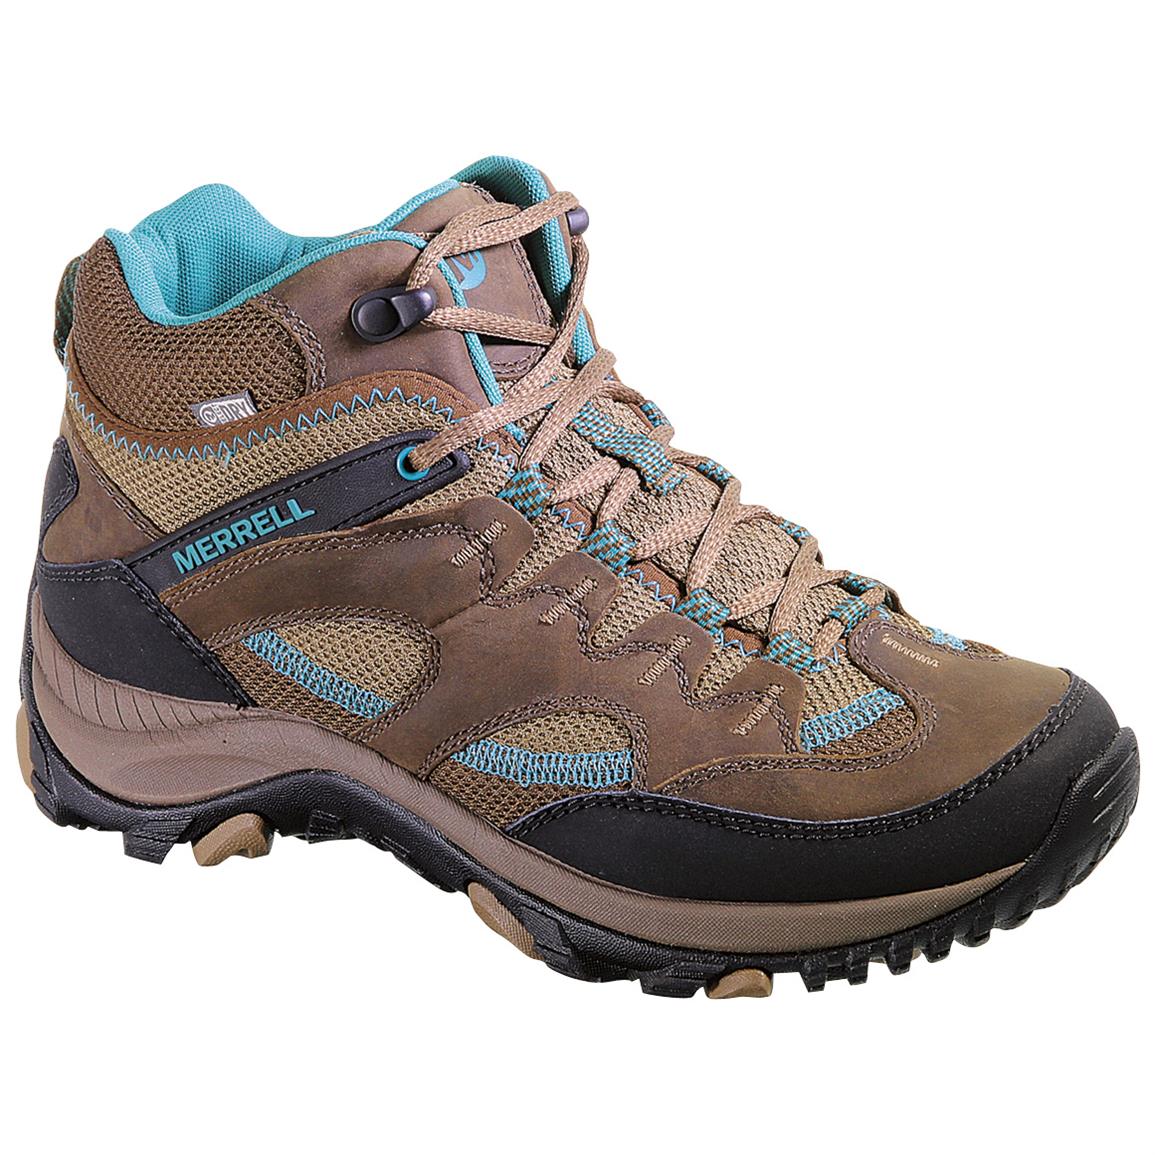 Women's Merrell Salida Mid Waterproof Hiking Boots - 617460, Hiking ...